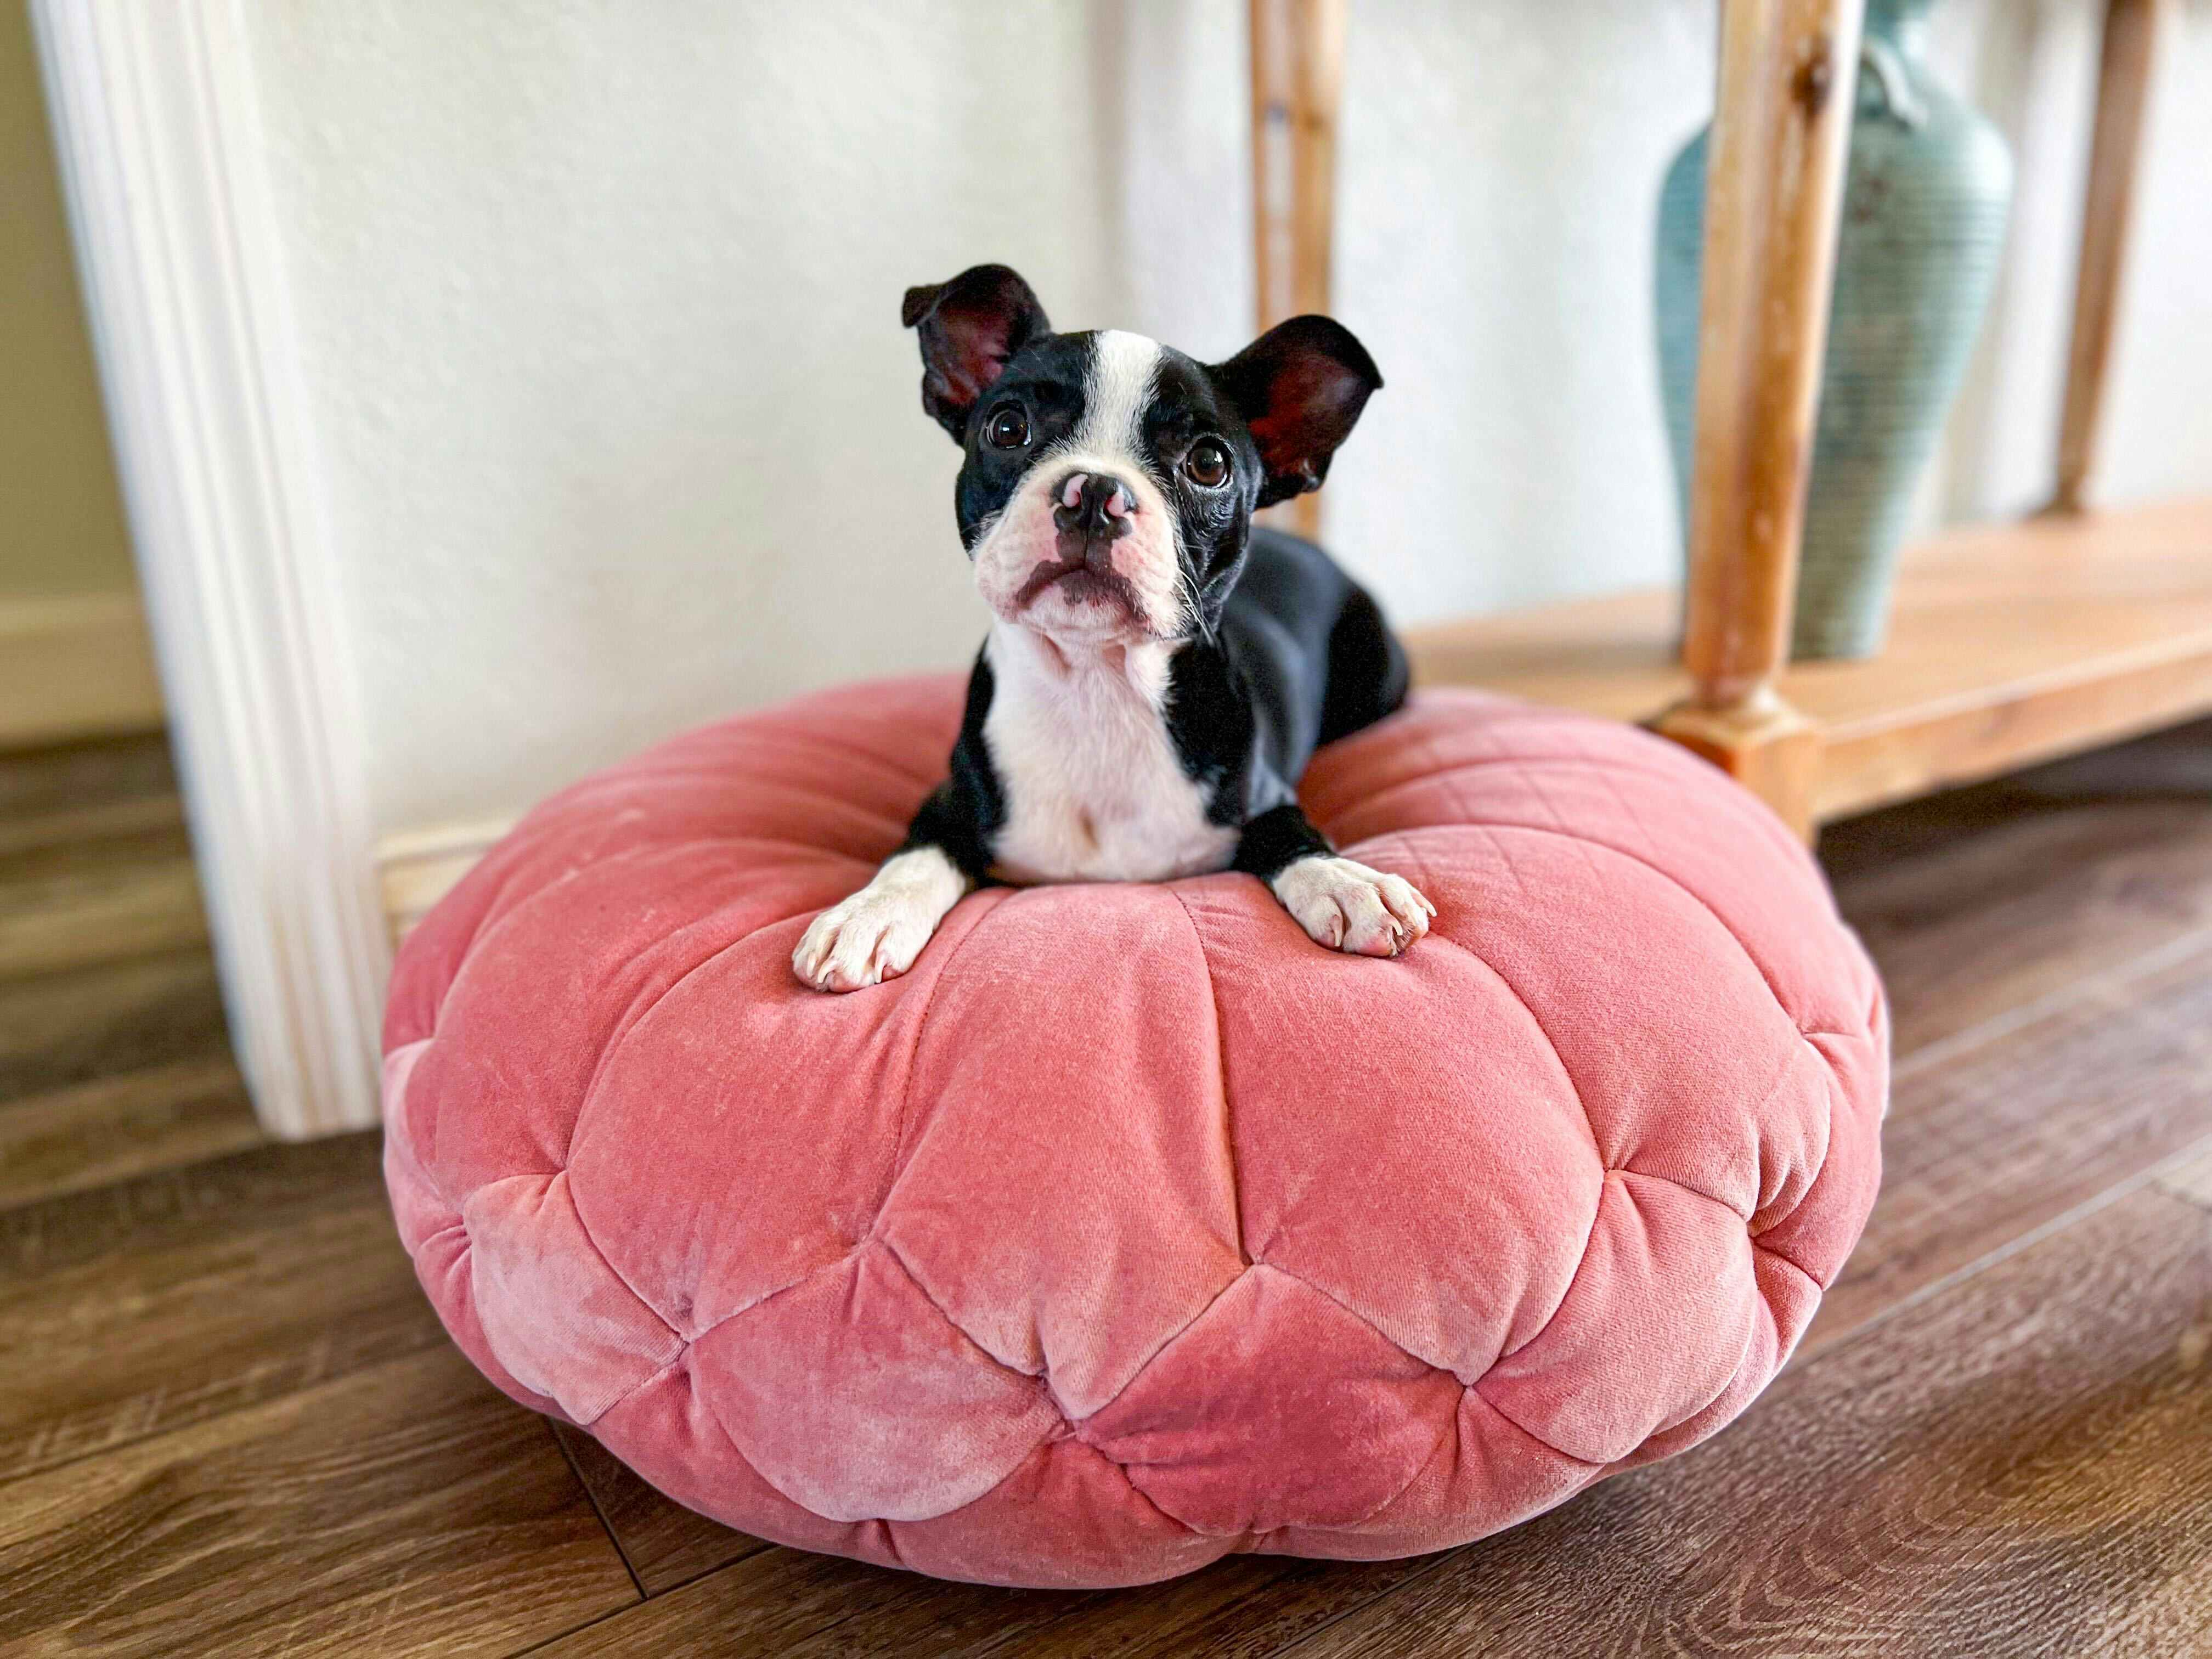 Real dog on pink cushion